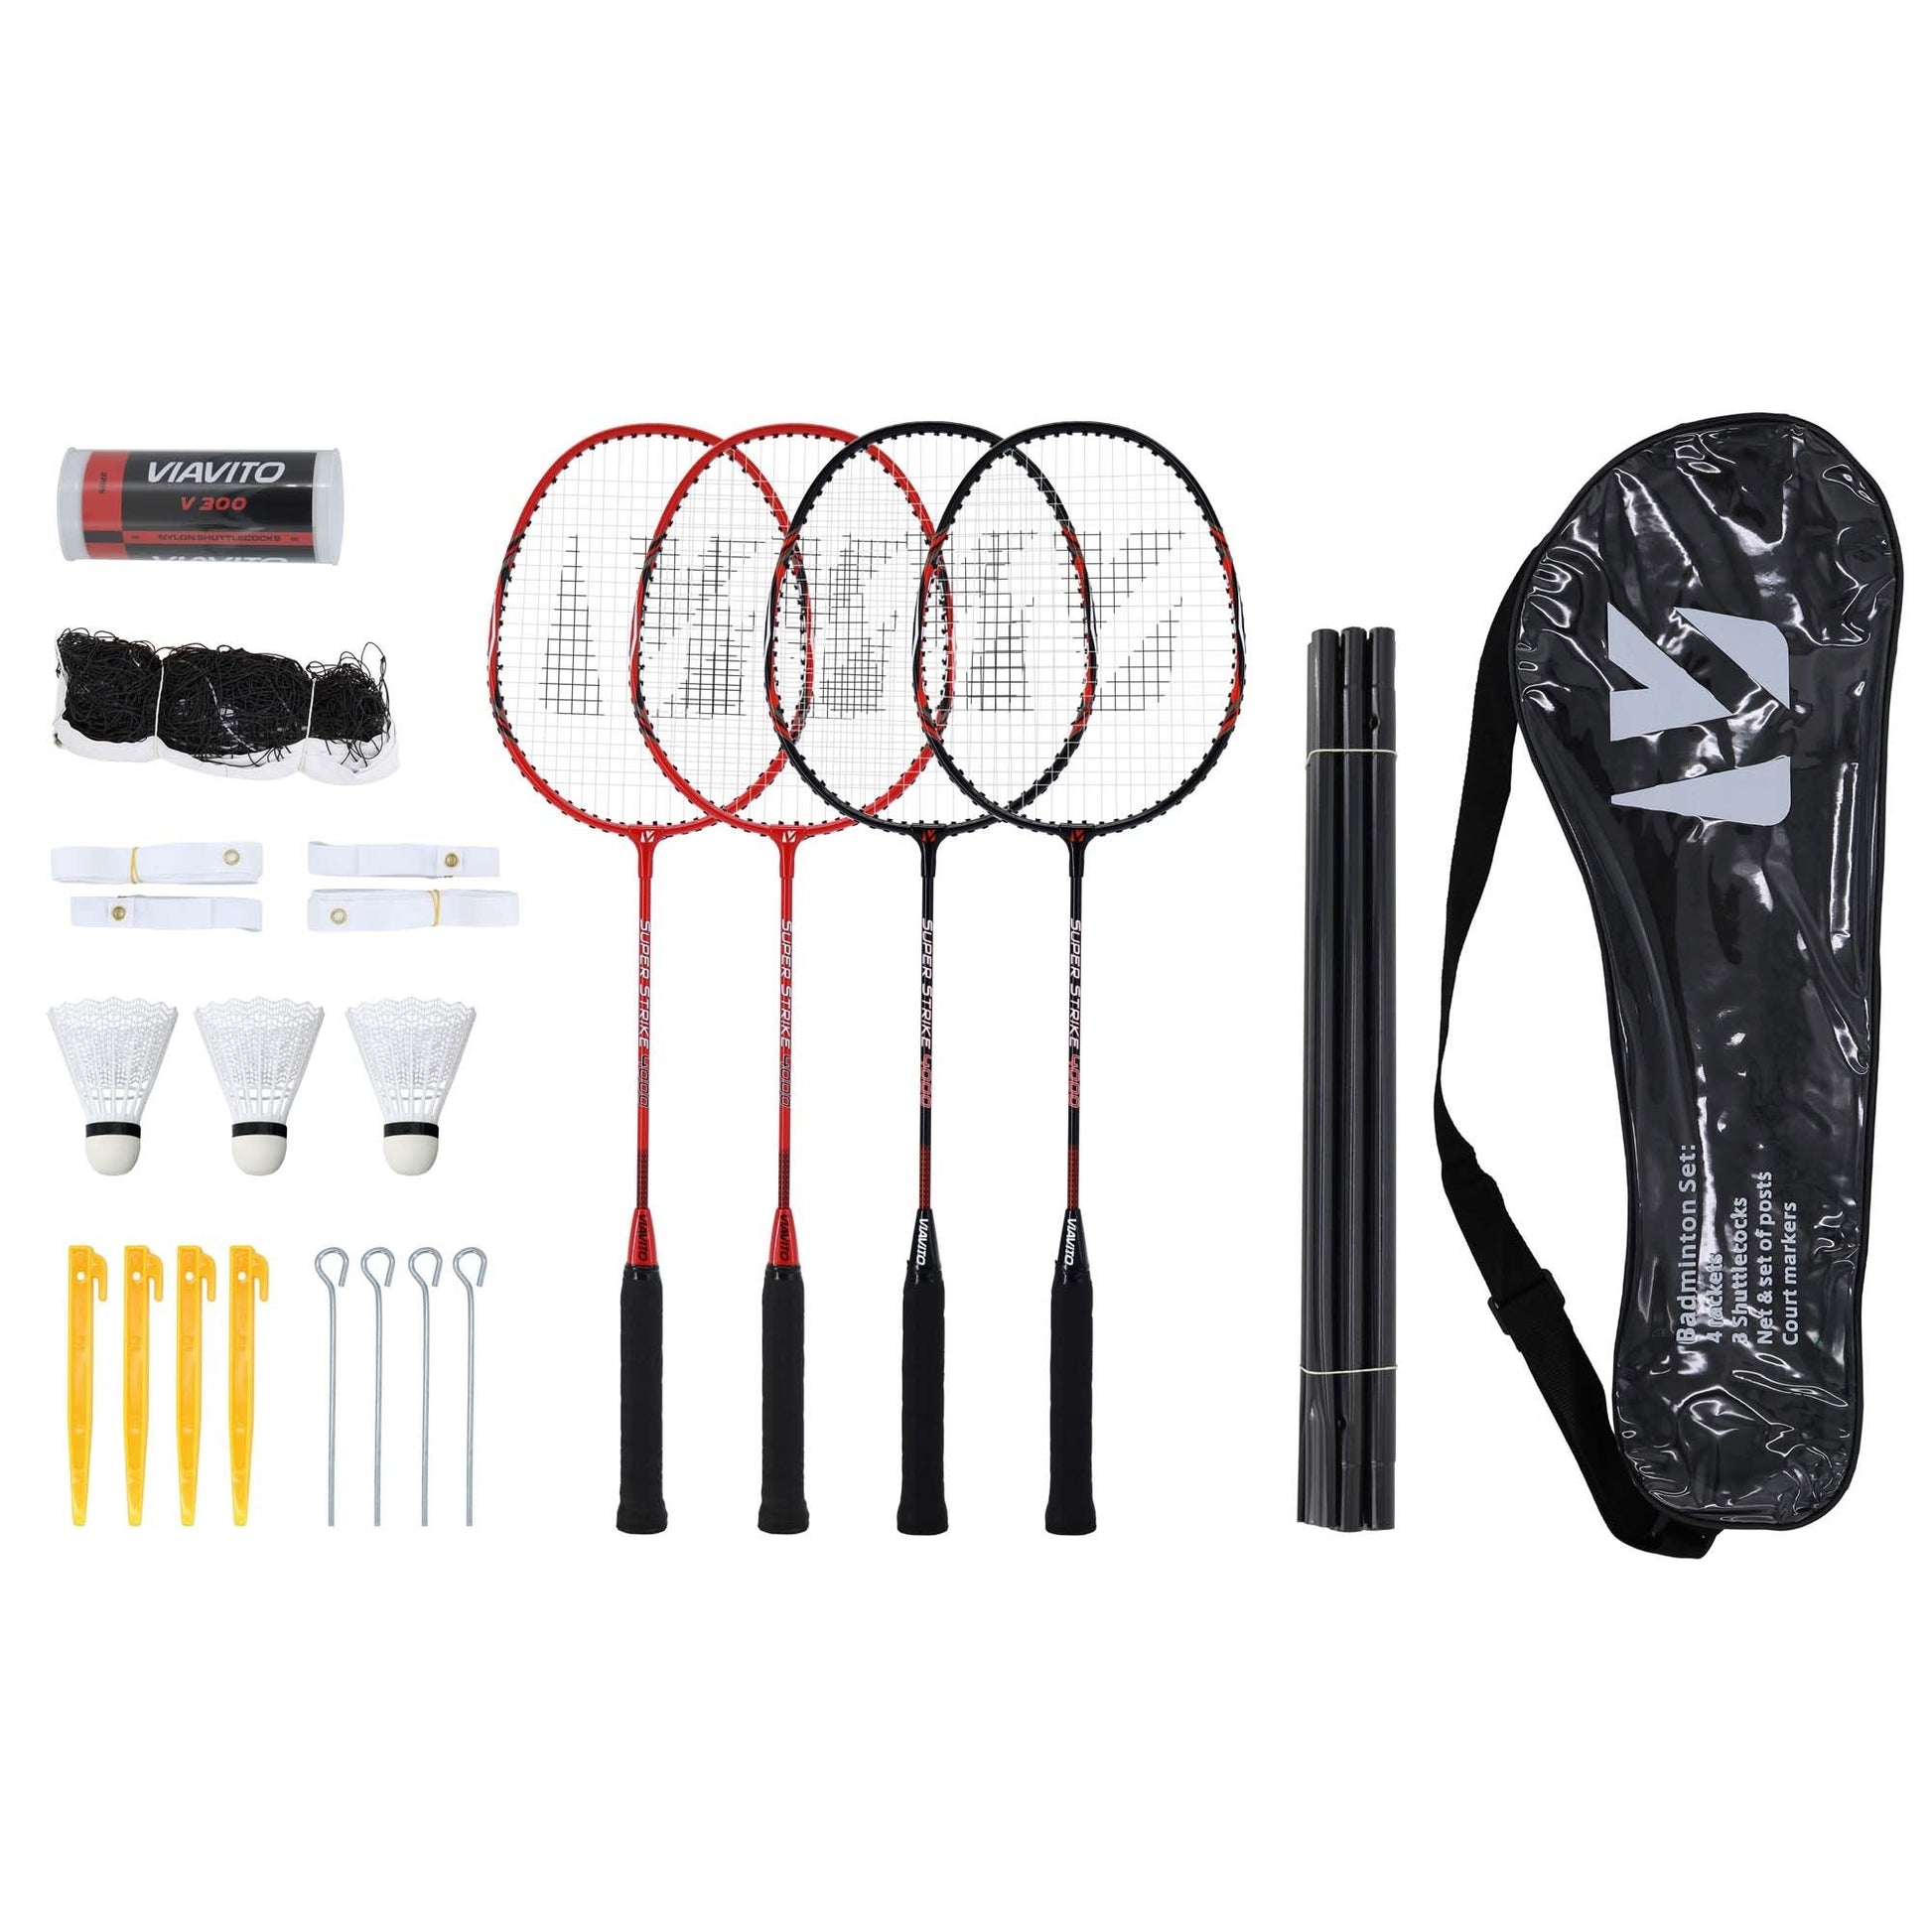 |Viavito Super Strike 4 Player Badminton Set|